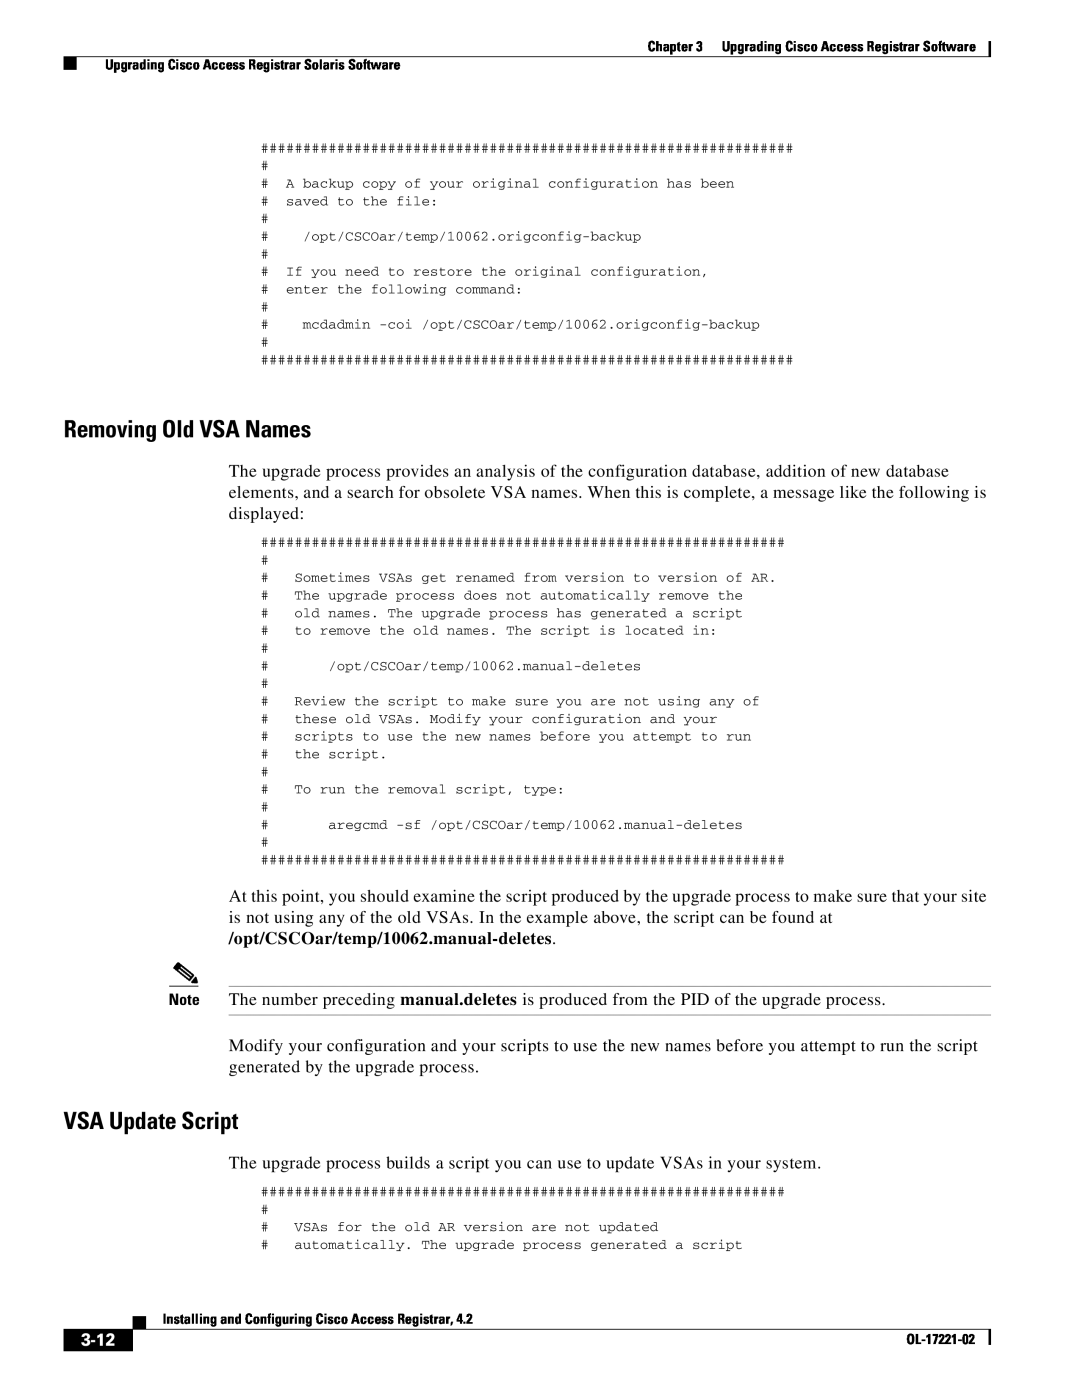 Cisco Systems 4.2 manual Removing Old VSA Names, VSA Update Script, 3-12 